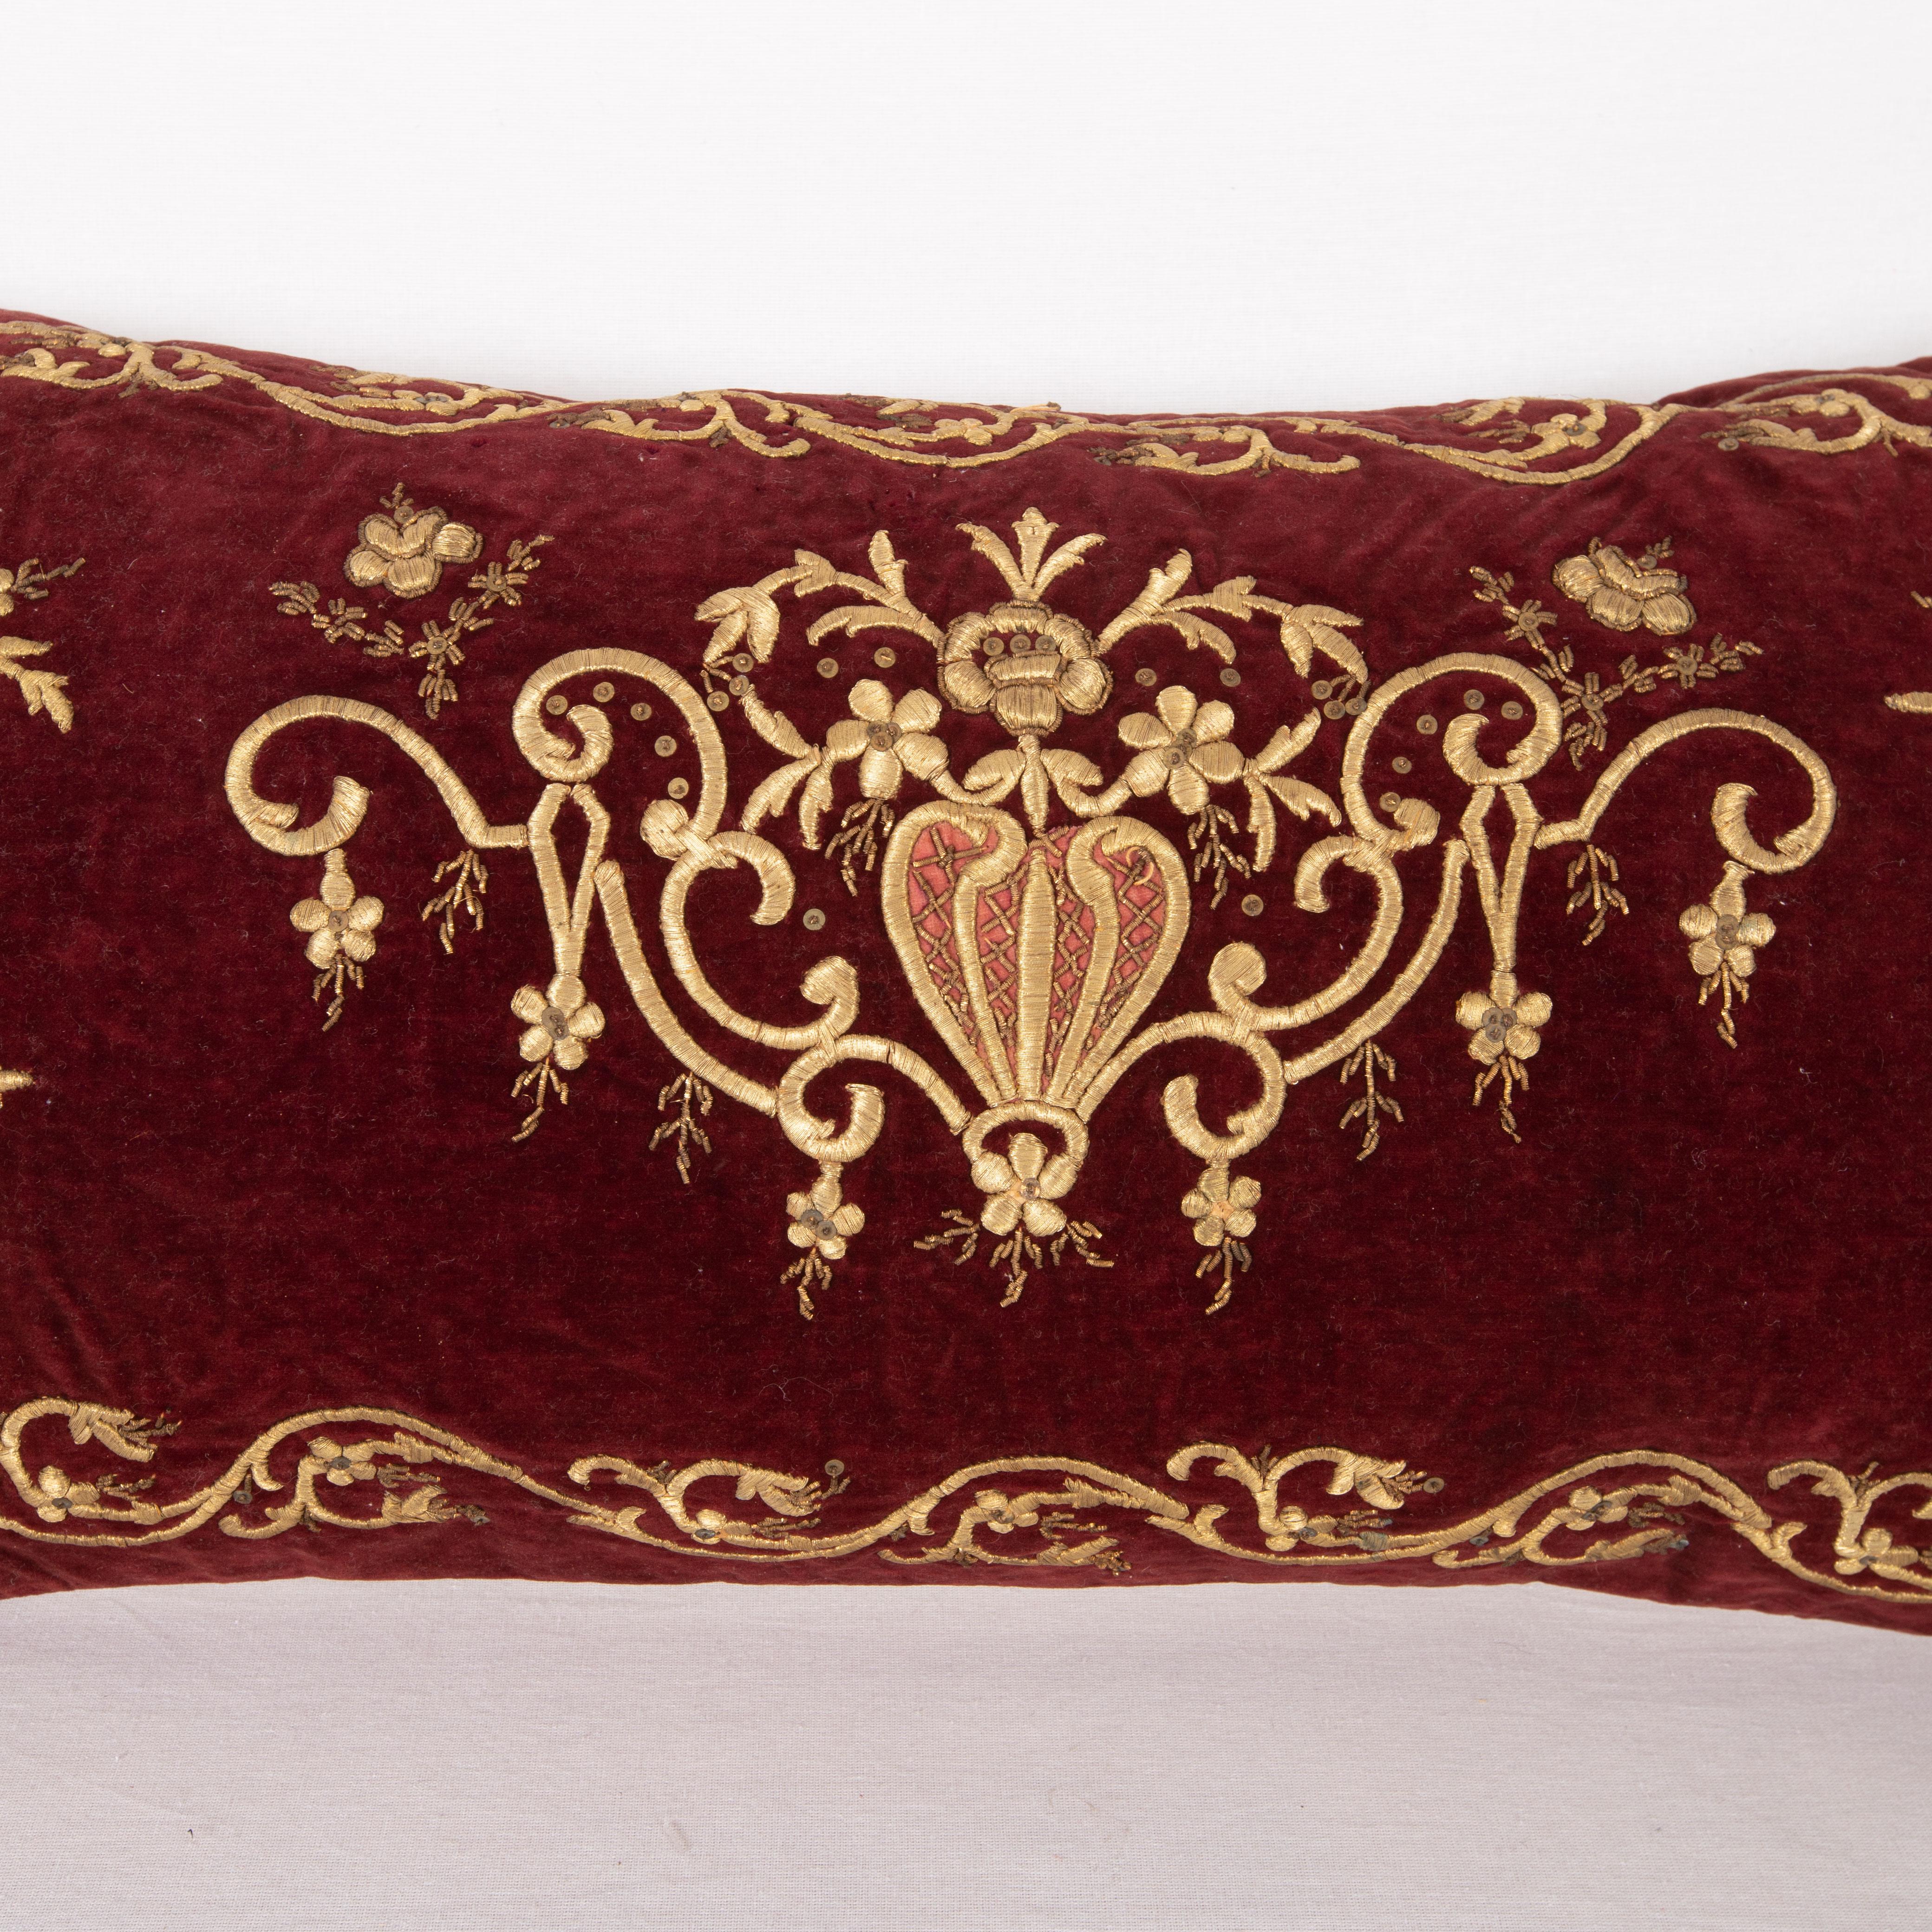 Turkish Antique Silk Velvet Ottoman Sarma Pillow Cover, L 19th C. For Sale